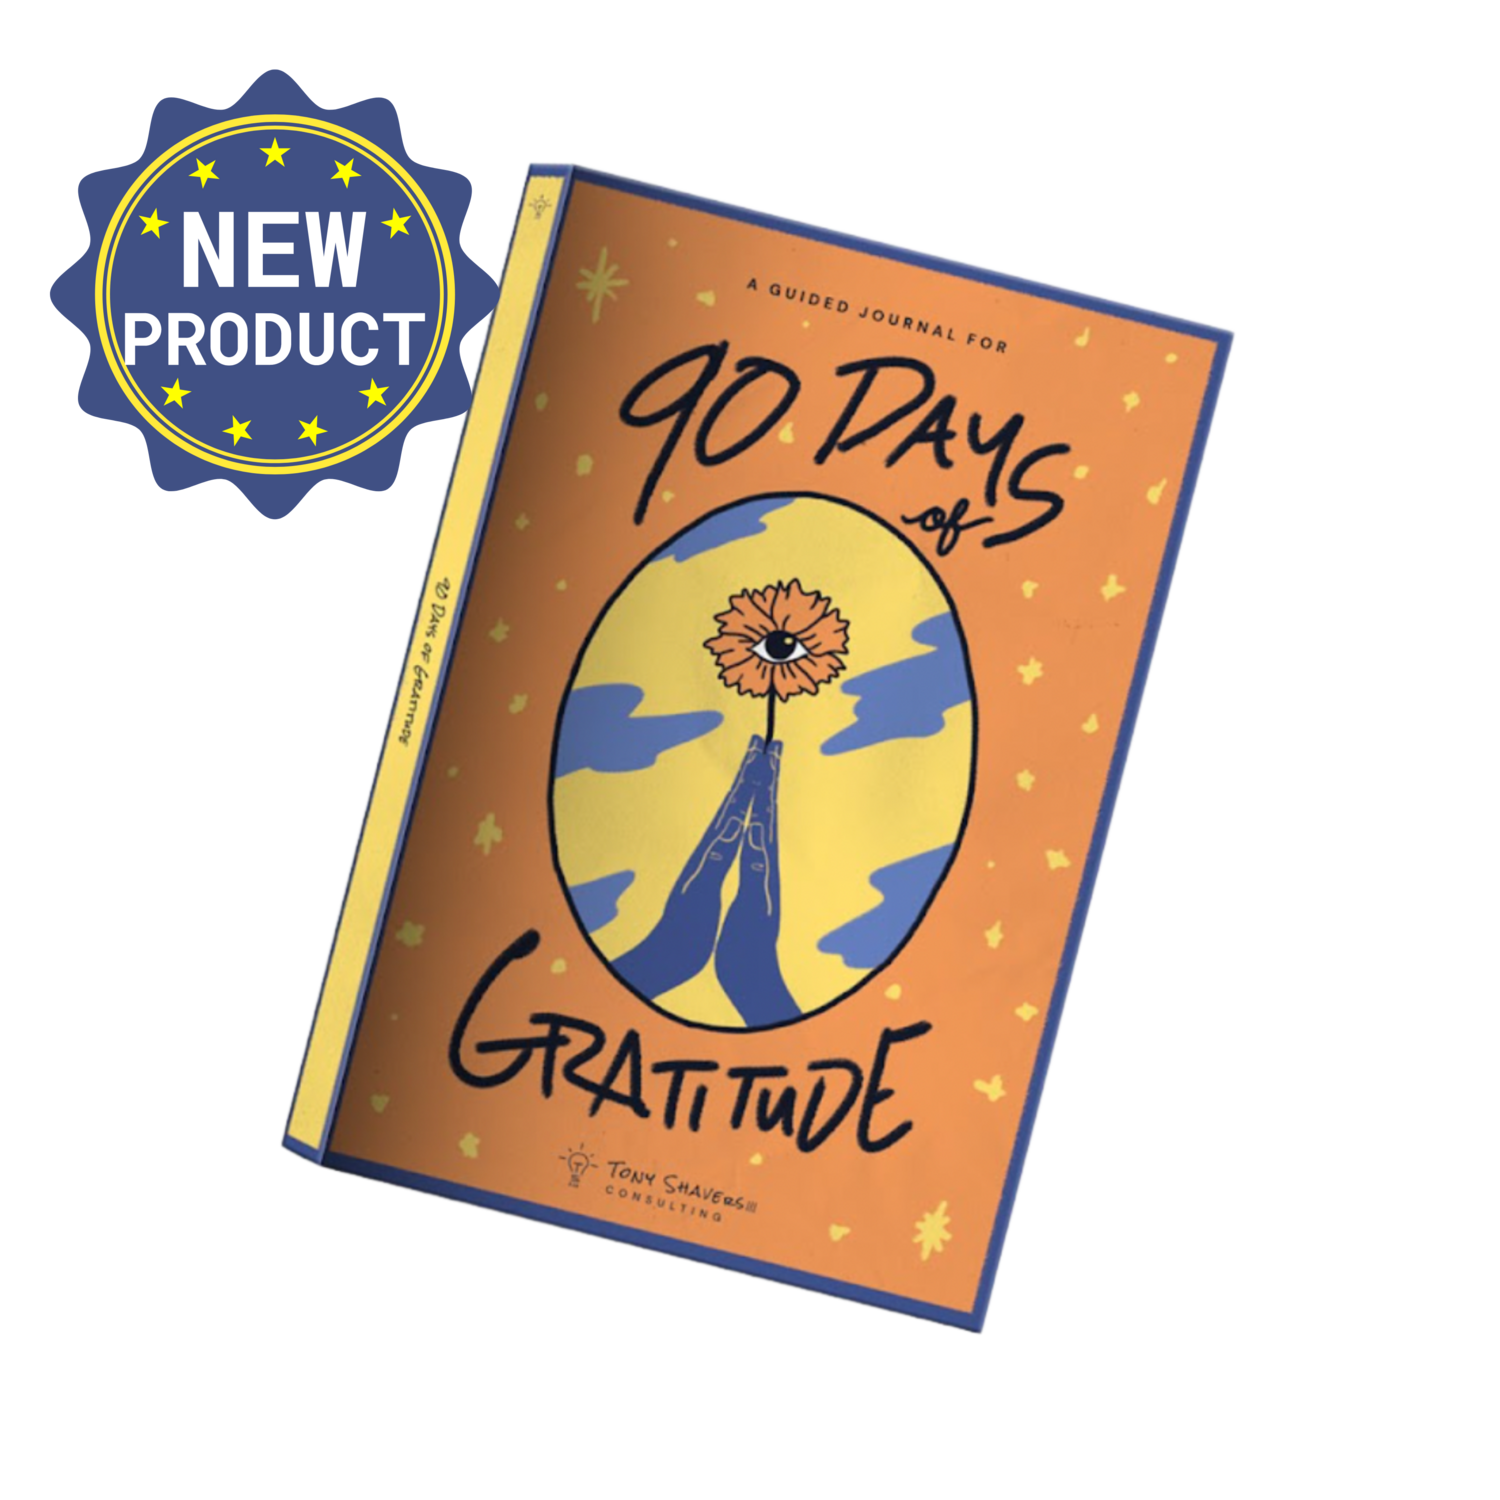 90 Days of Gratitude Journal